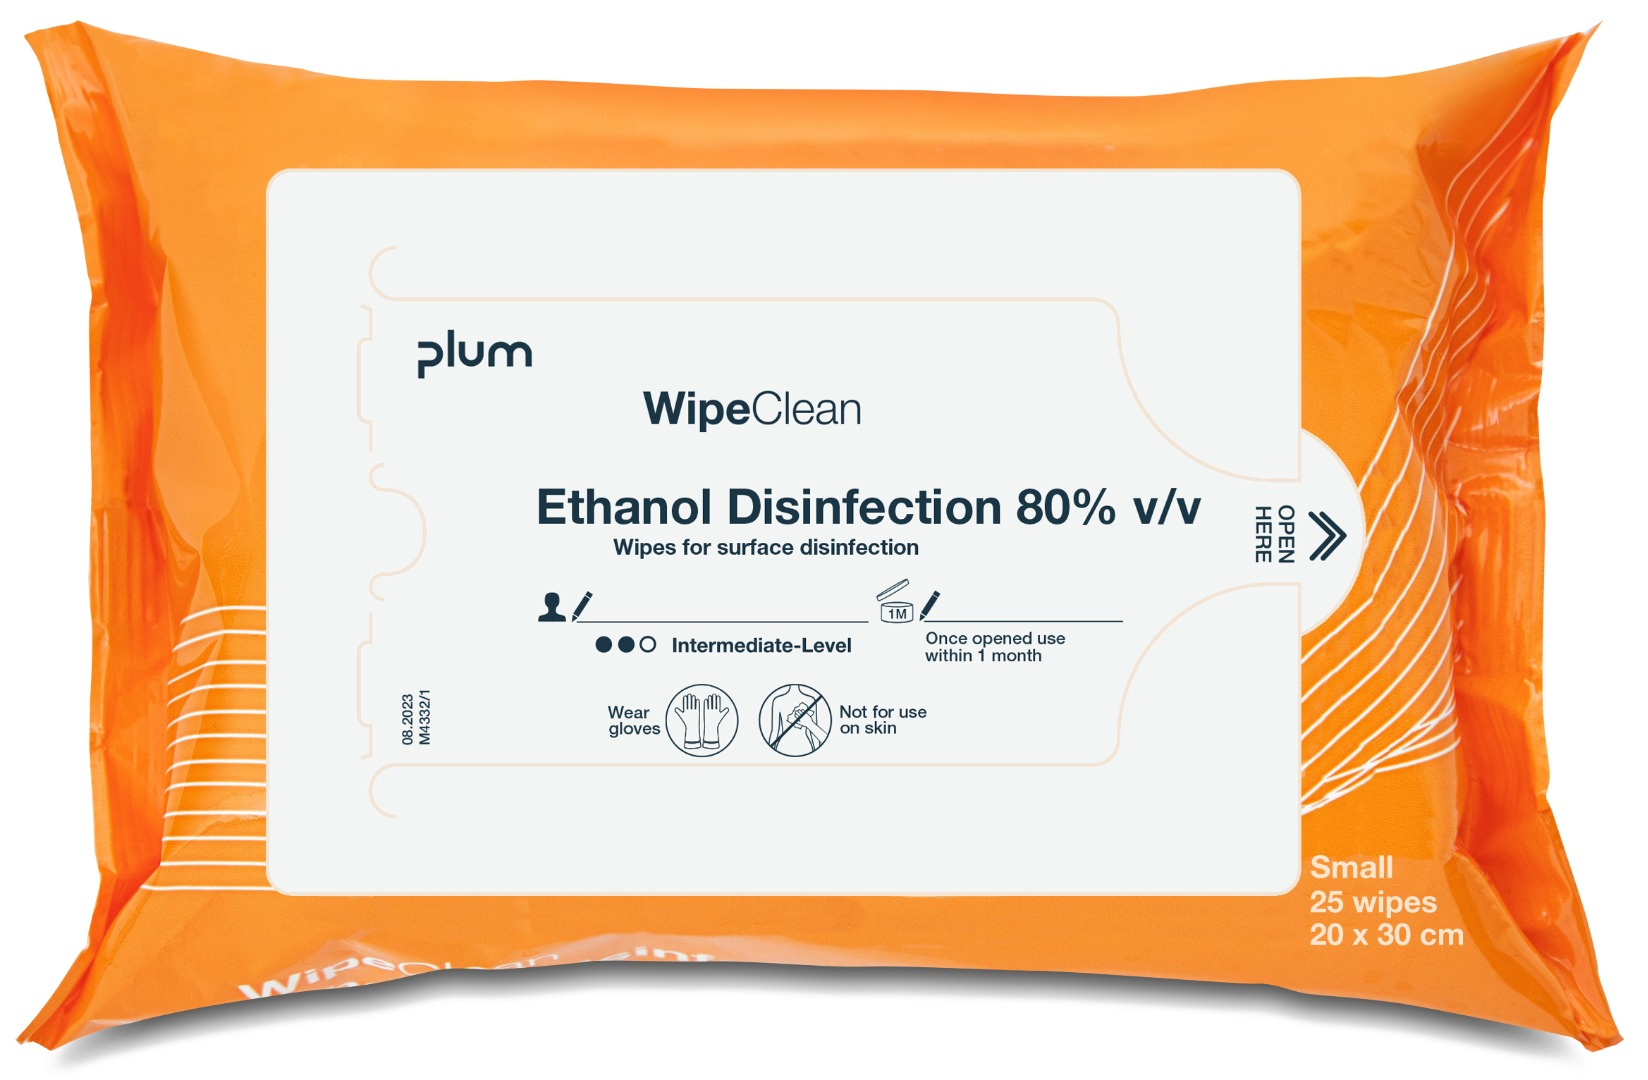 Plum, Wipeclean, 80% ethanol